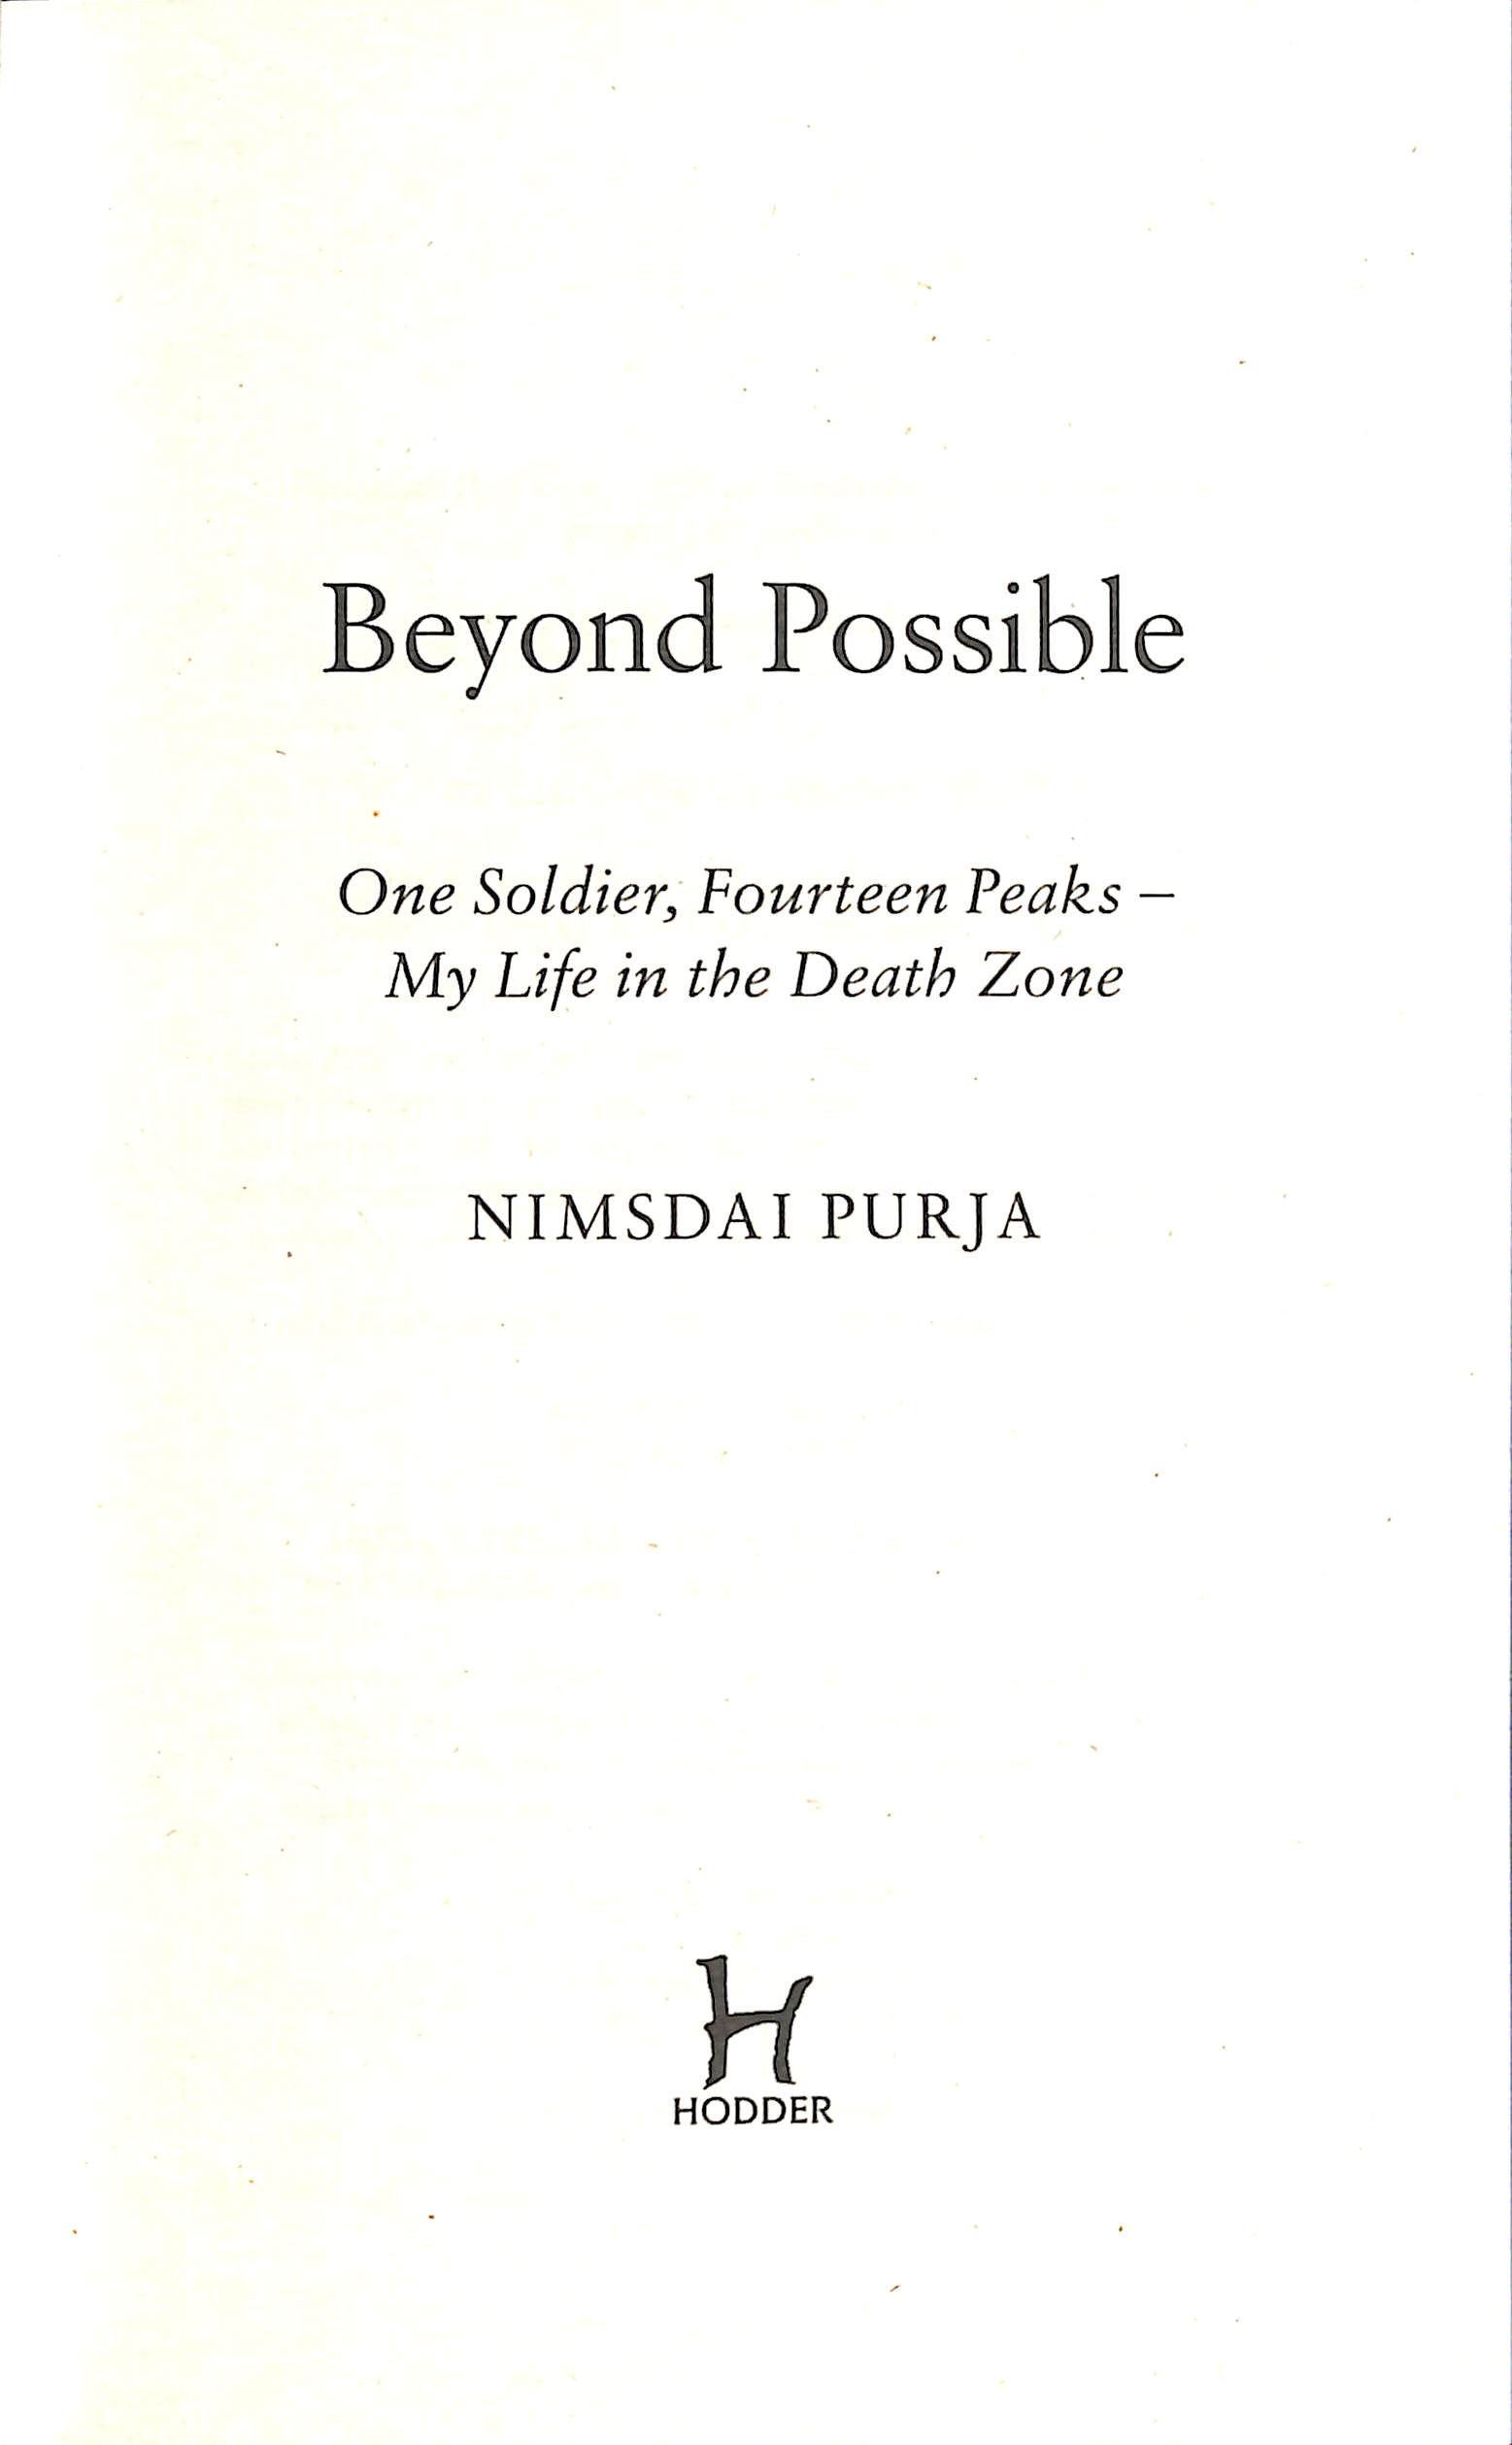 Beyond possible by Nimsdai Purja